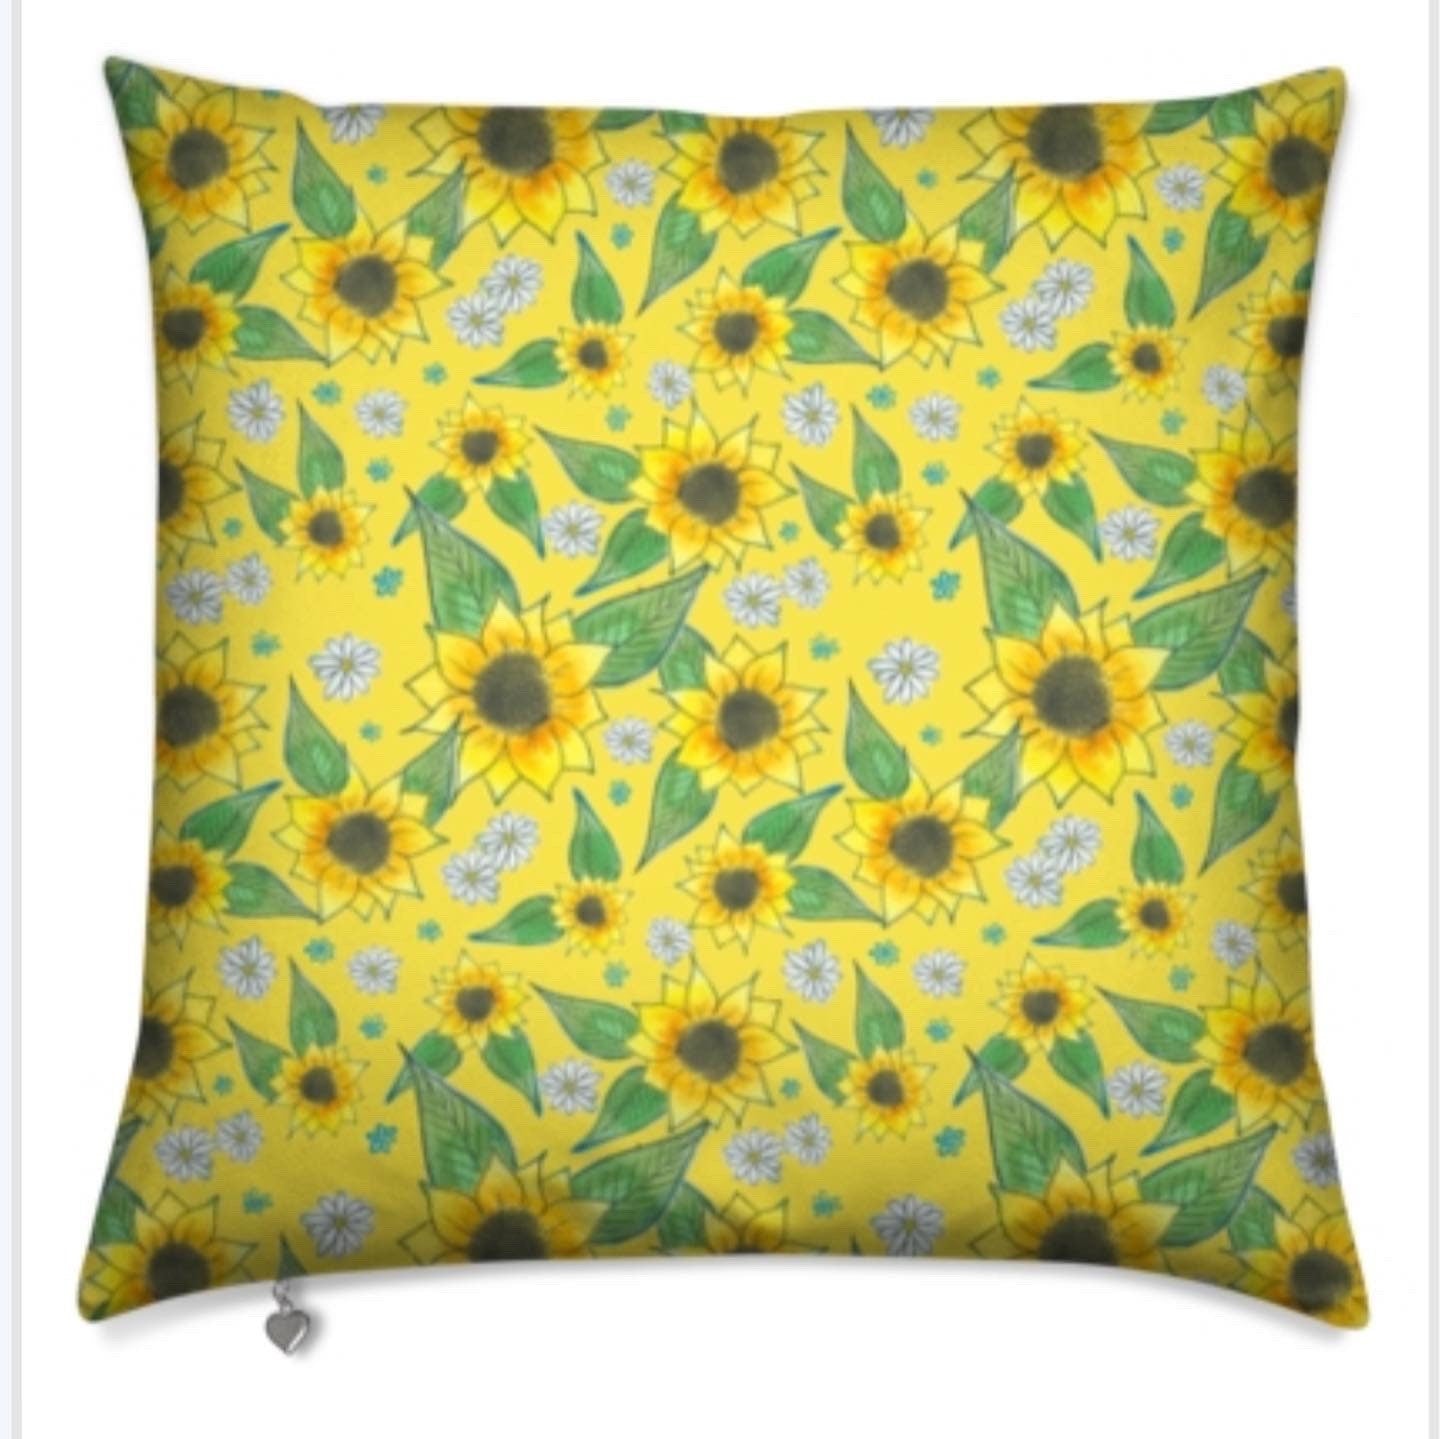 Sunflowers Repeat Pattern